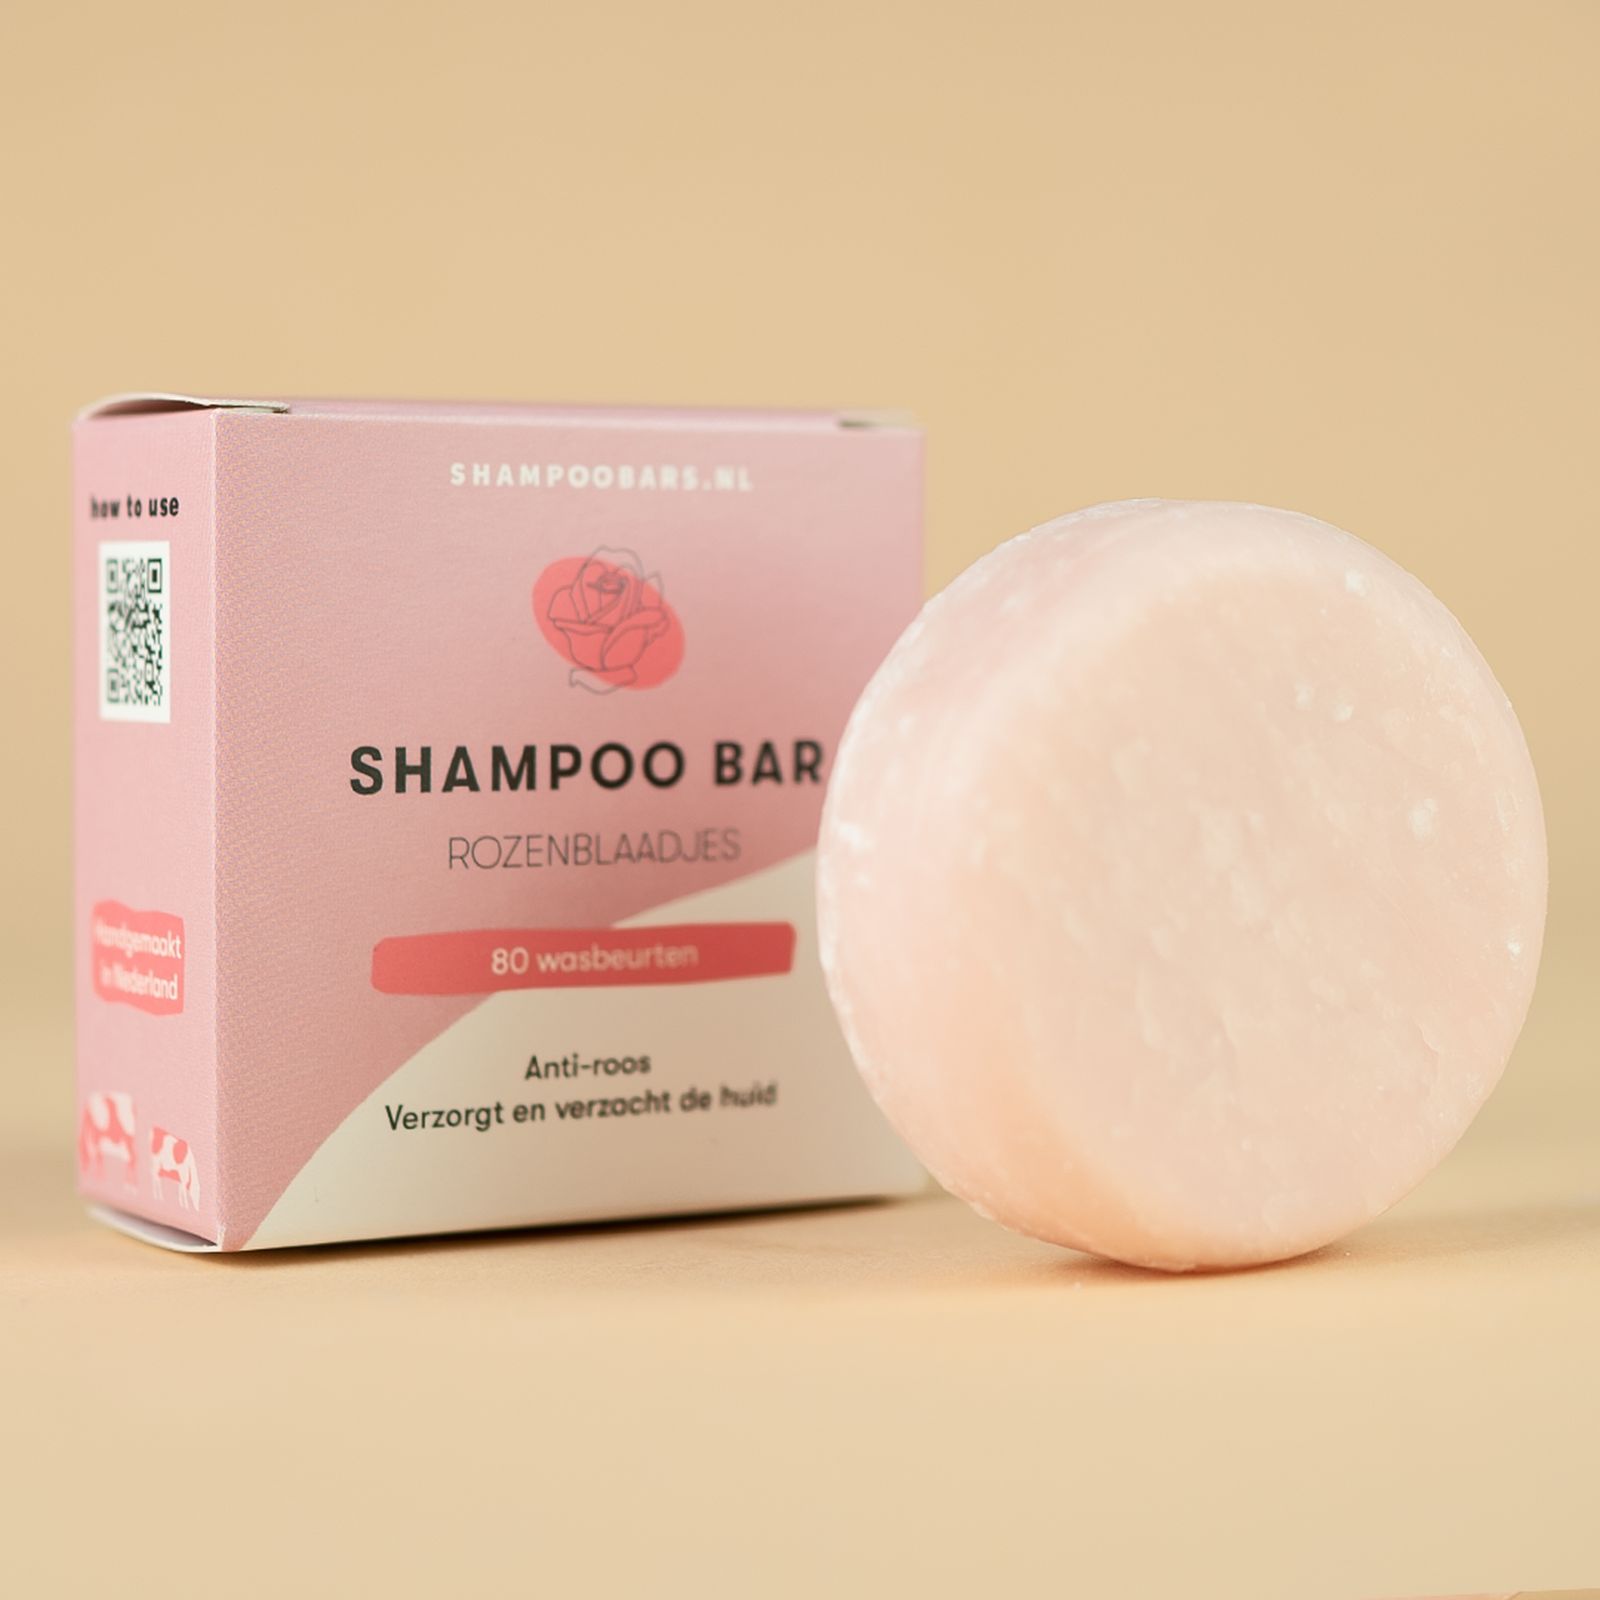 023-shampoo-bar-rozenblaadjes-web.jpg